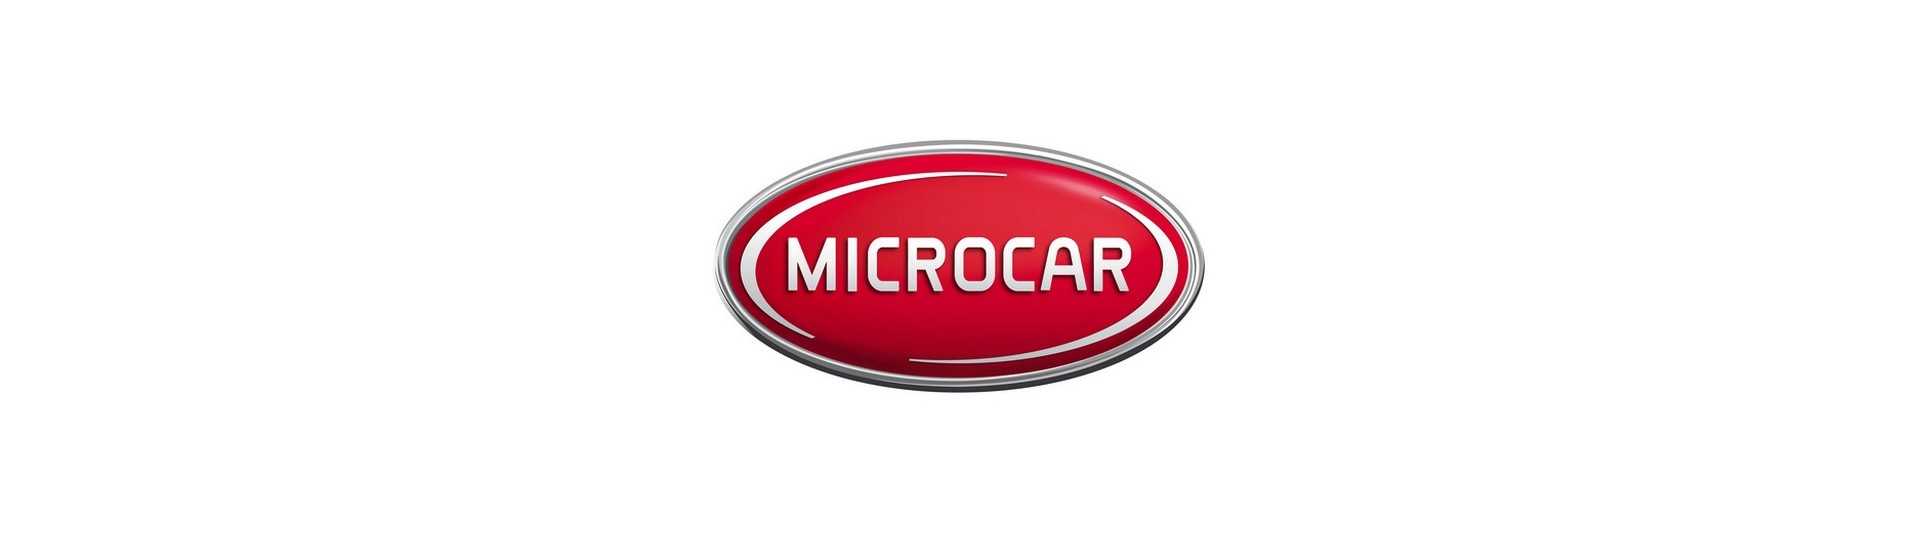 Paras hinnastokaapeli autoon ilman lupaa Microcar